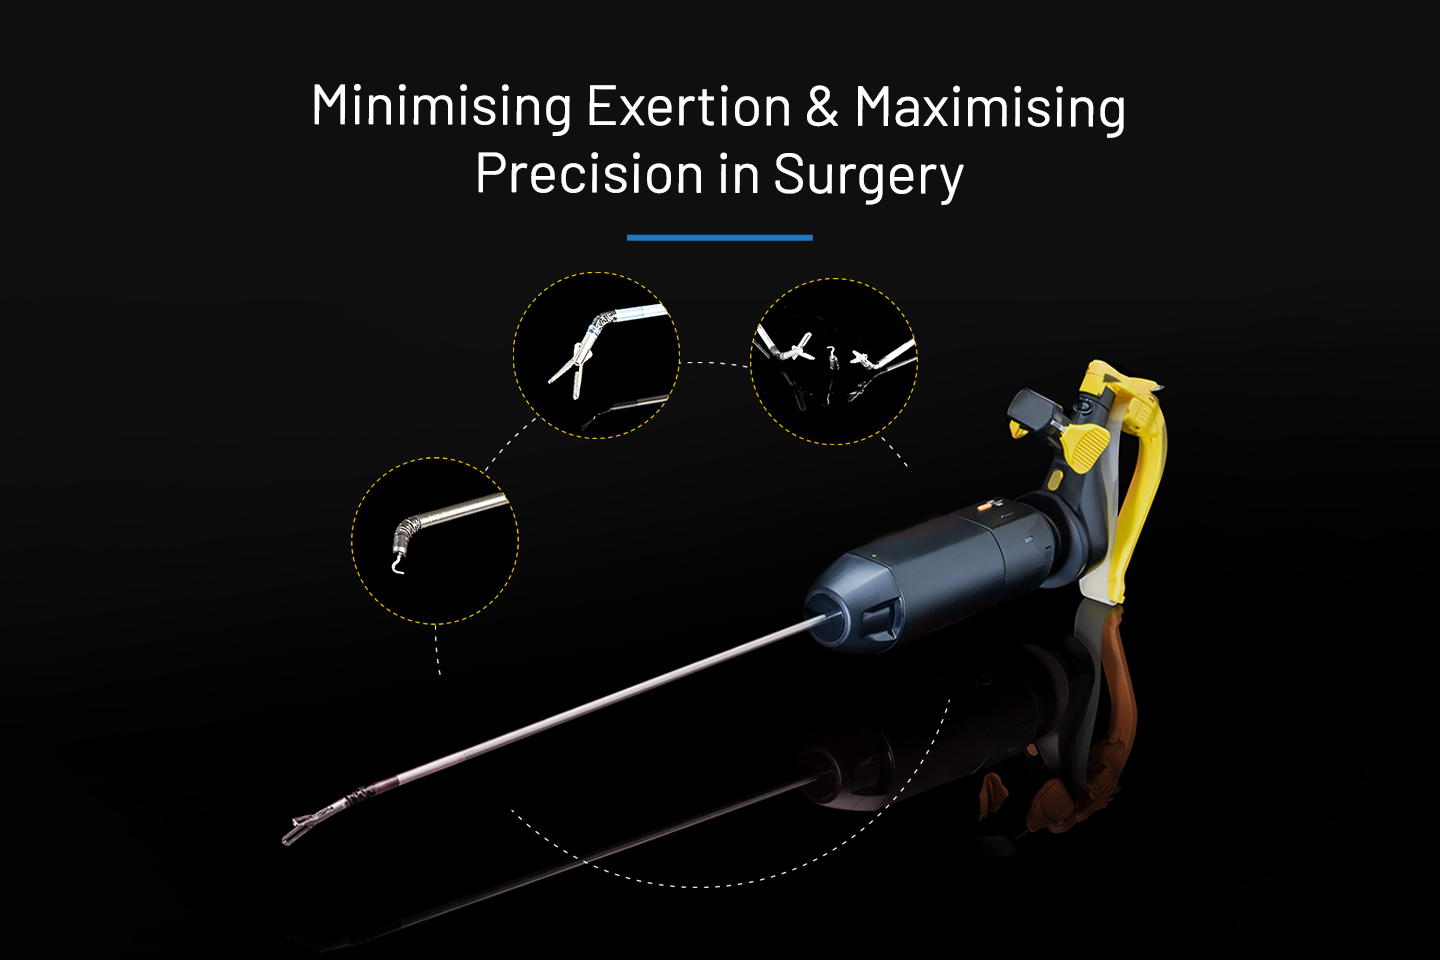 Handheld Robotic surgery v/s traditional laparoscopic surgery